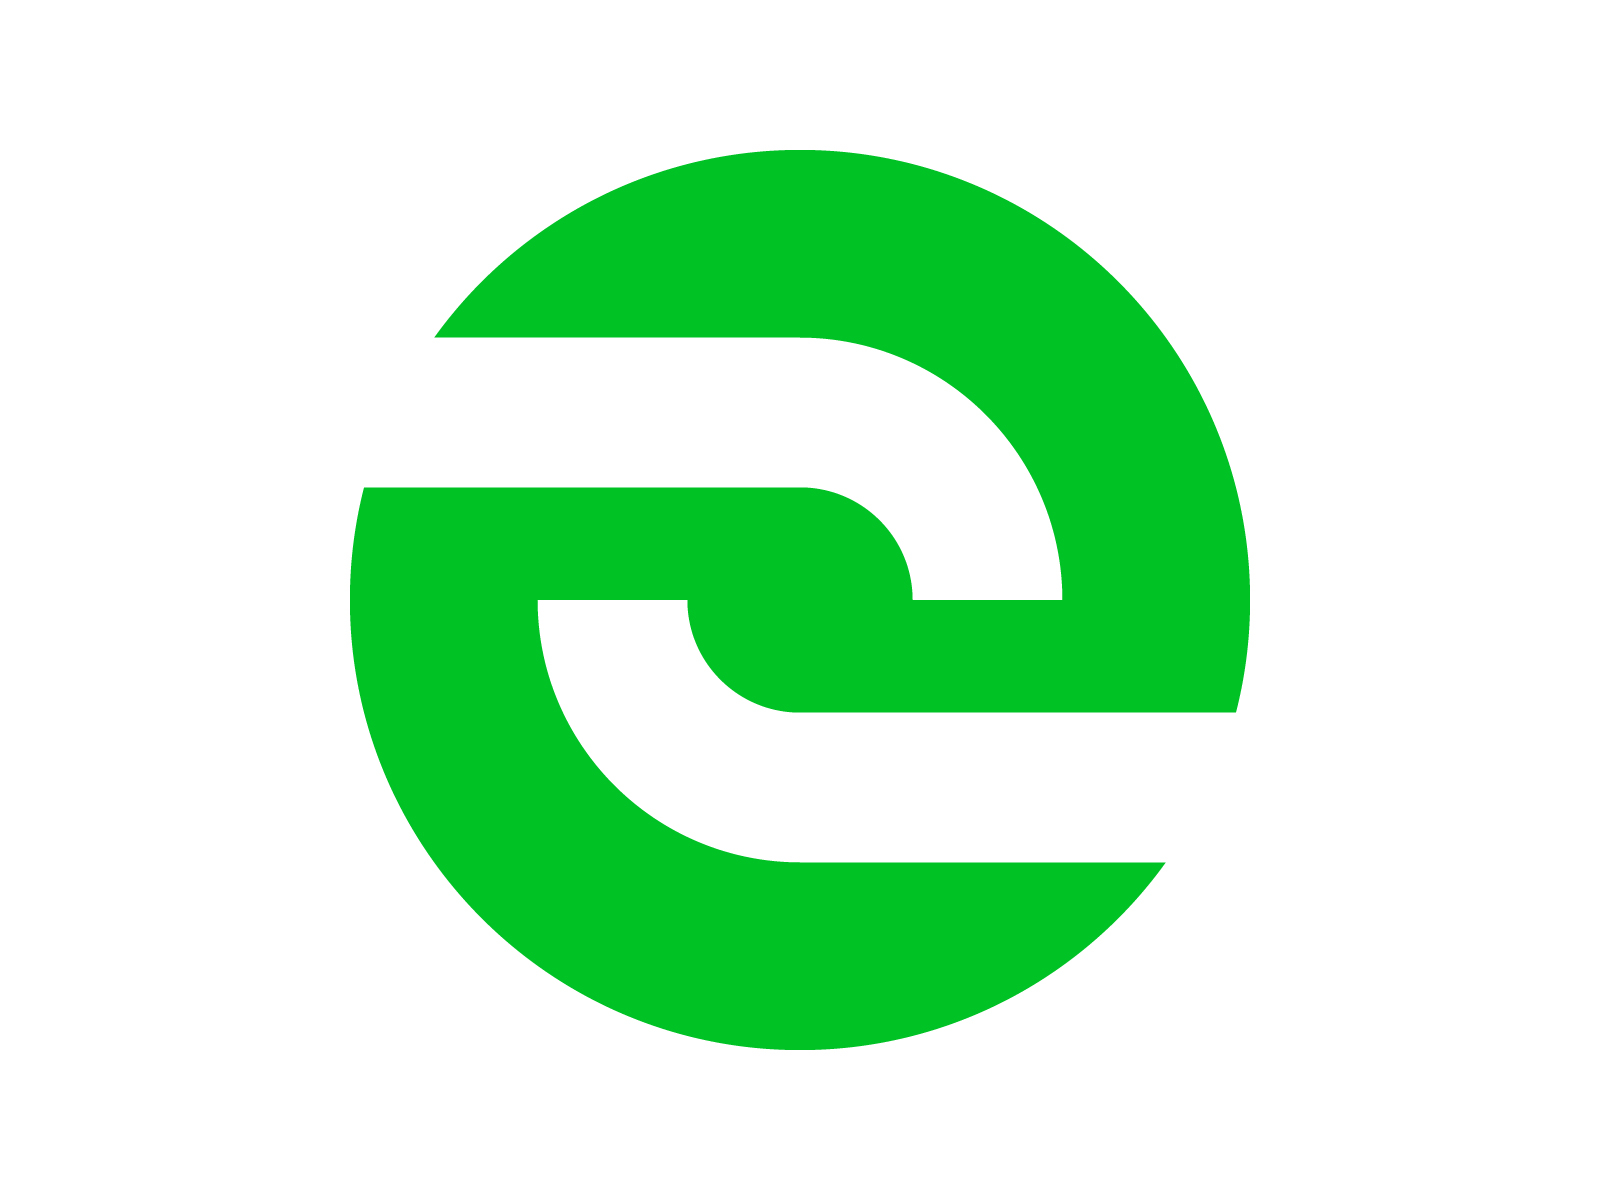 E logo by Vaibhav Jadhav on Dribbble